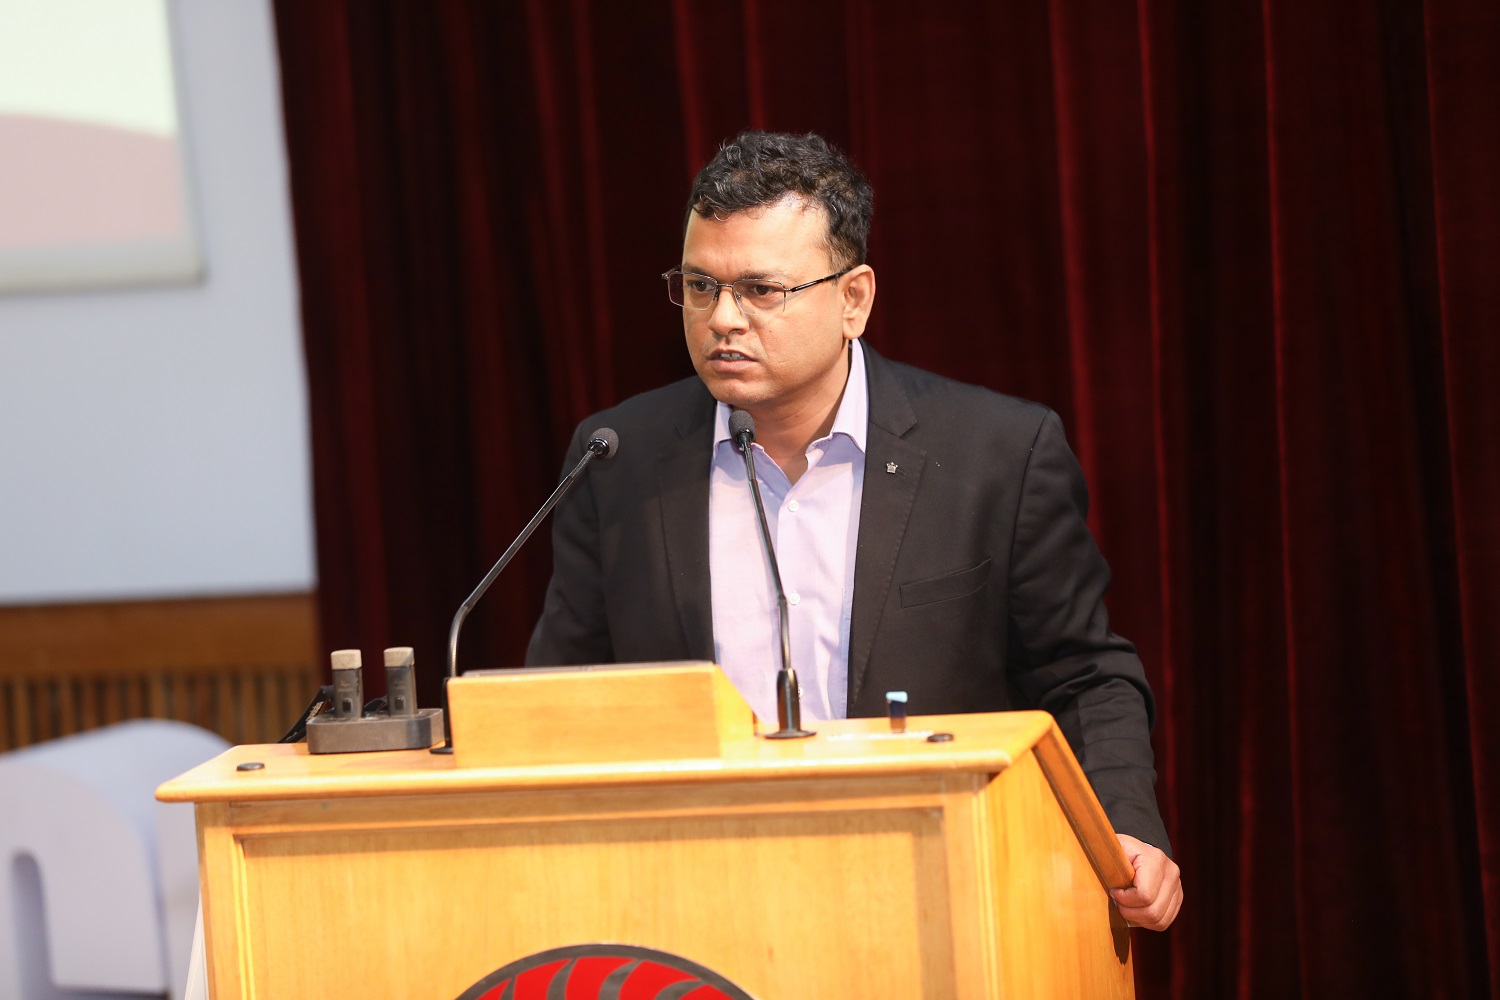 Himanshu Nivsarkar, Executive Vice President & Head, CSR, addresses the participants.